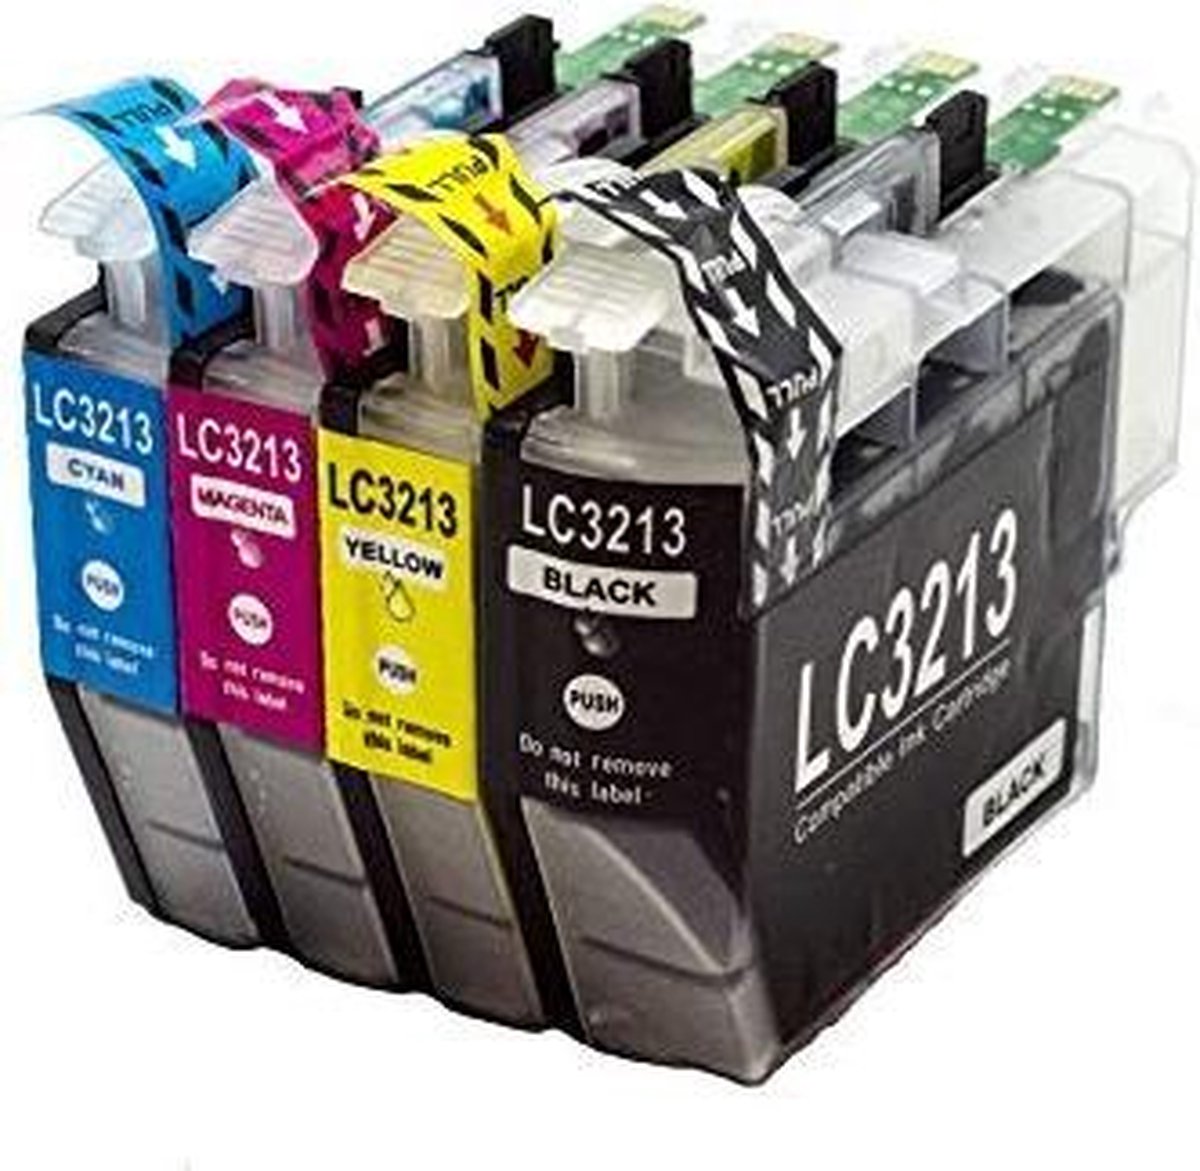 Brother LC-3213 XL inkt cartridges Multipack - Huismerk